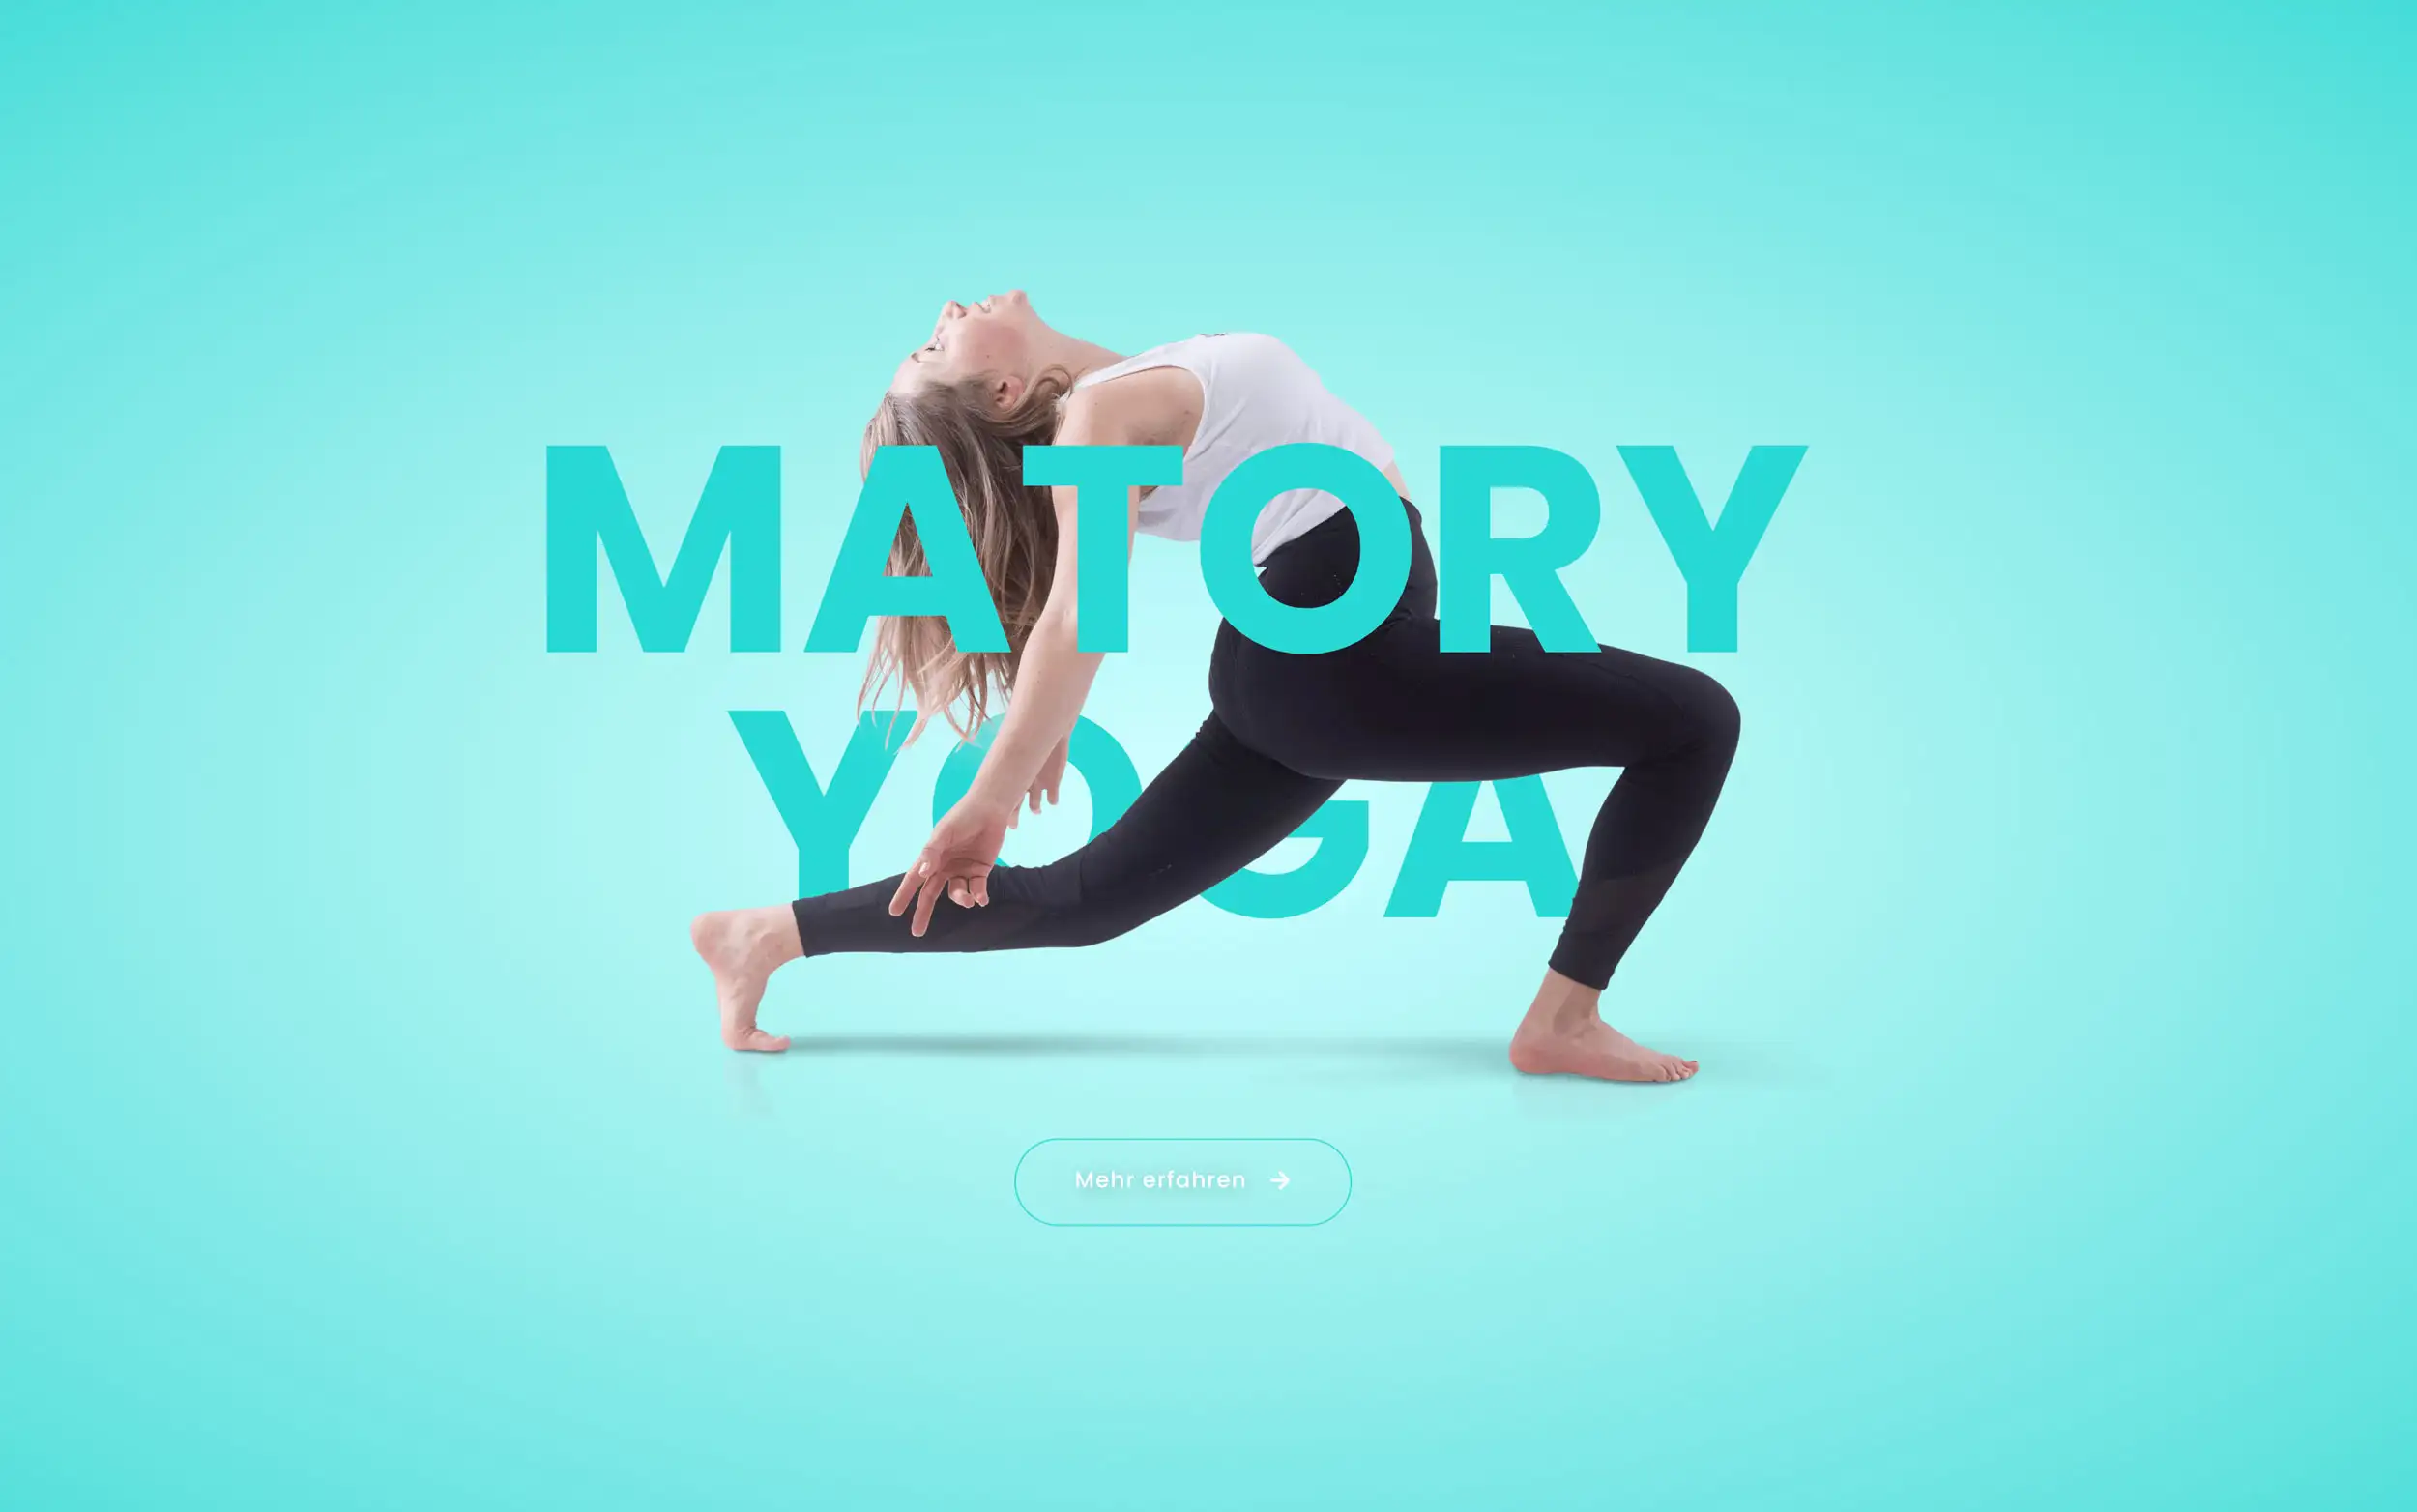 Werbung von Matory Yoga mit Frau in Yogastellung